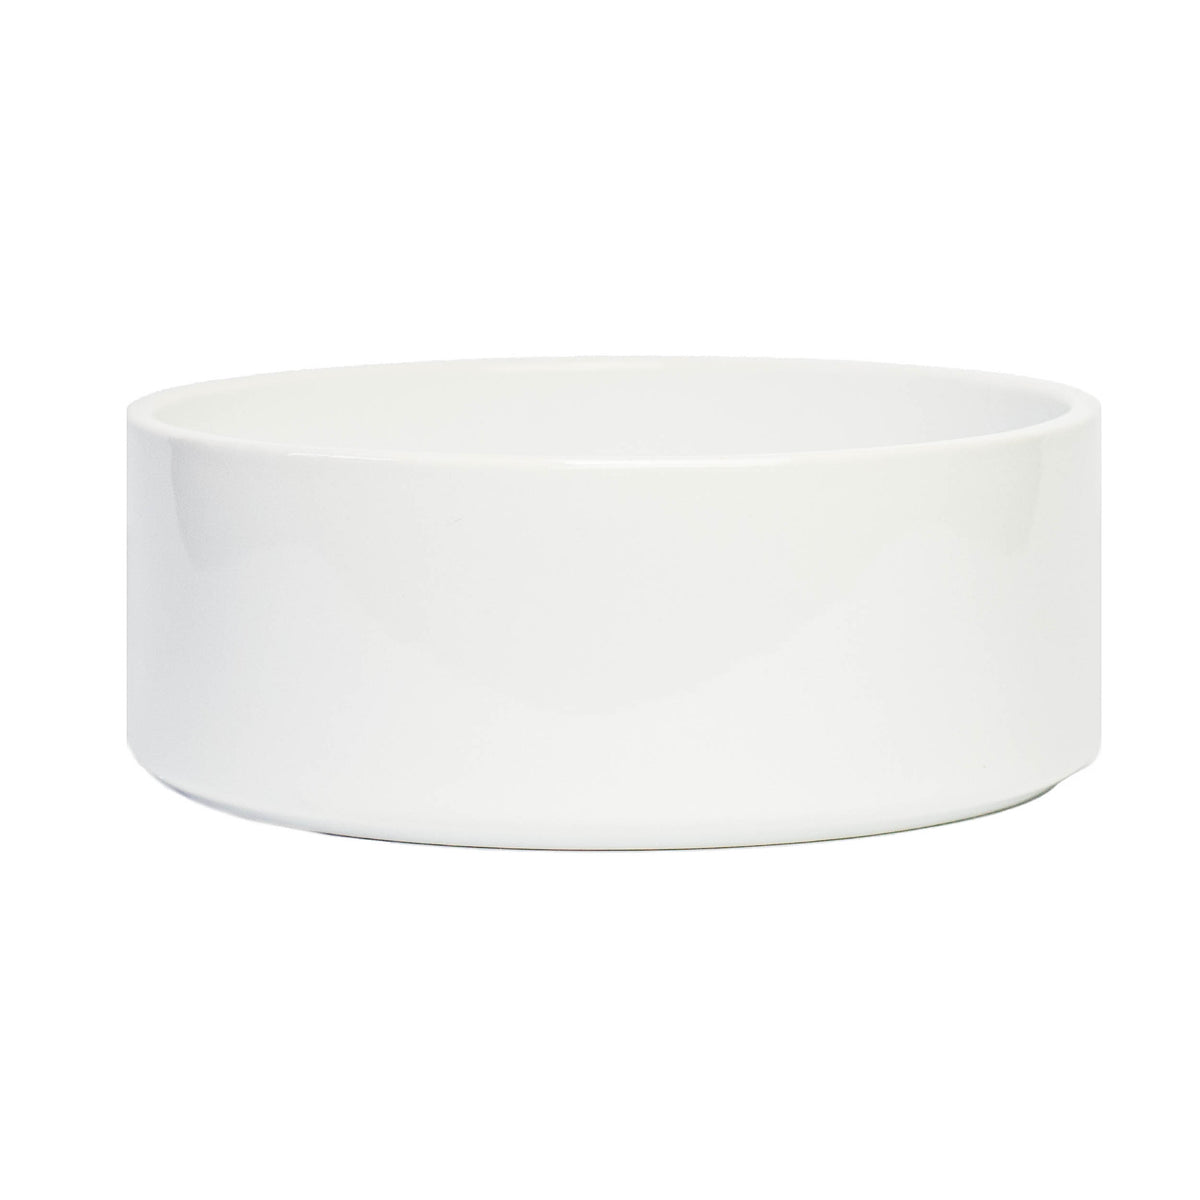 Personalised bowl for dogs / ceramic - 22oz 650ml (design 4)